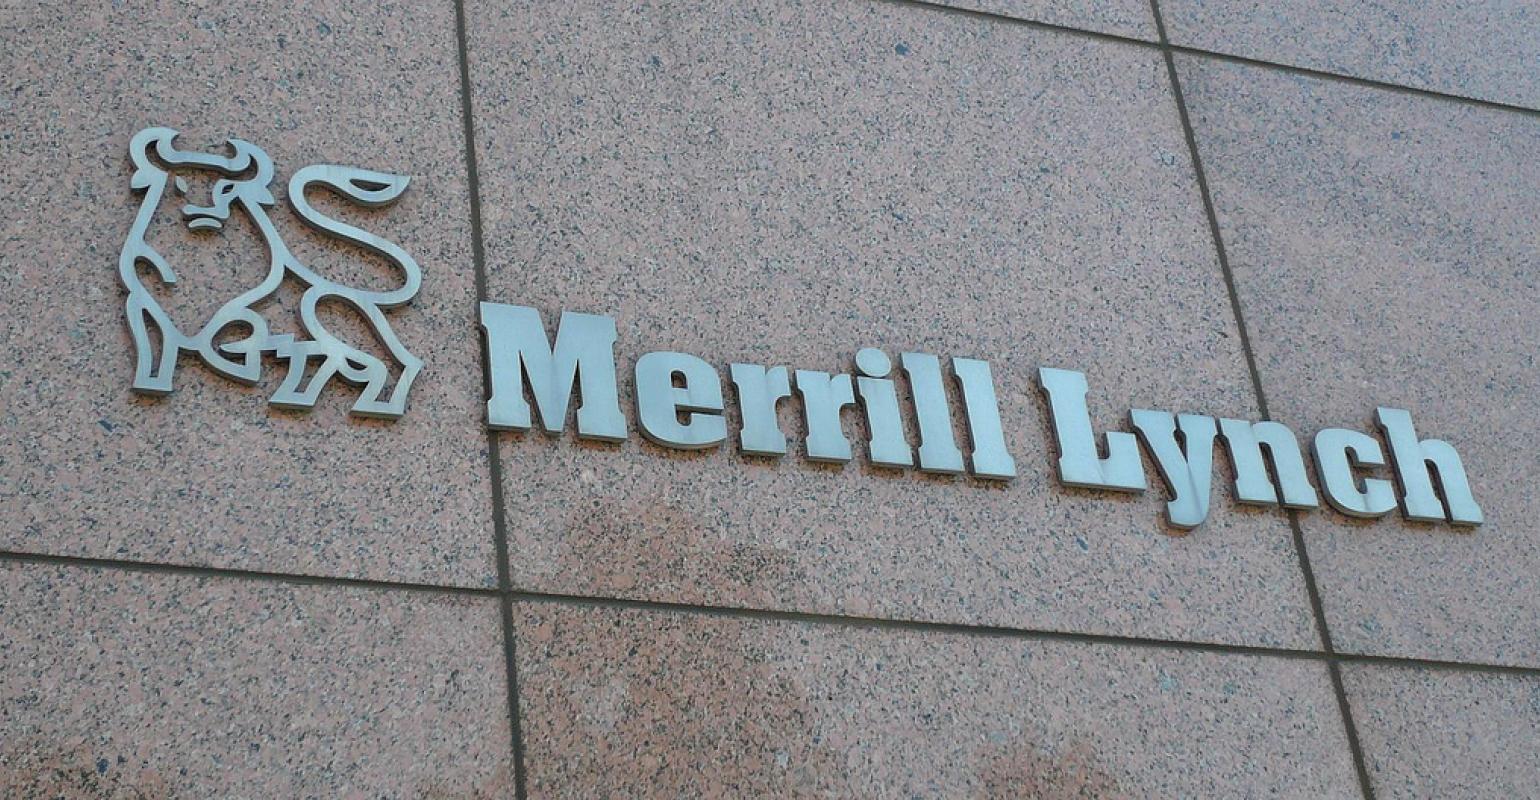 Merrill Lynch Brings in More Advisors, Record Revenue For BofA Wealth